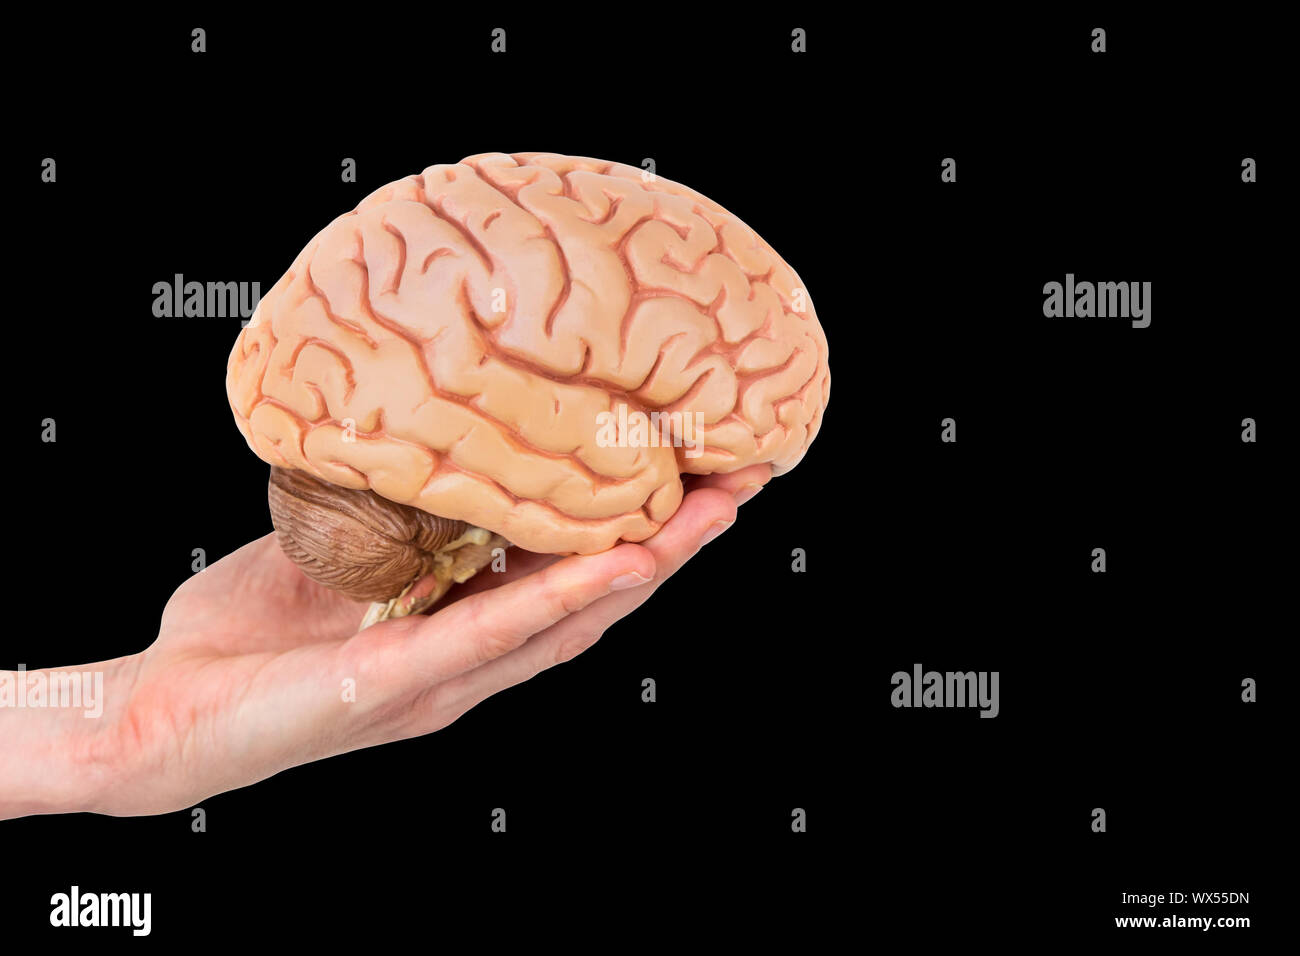 Hand holding model human brain on black background Stock Photo